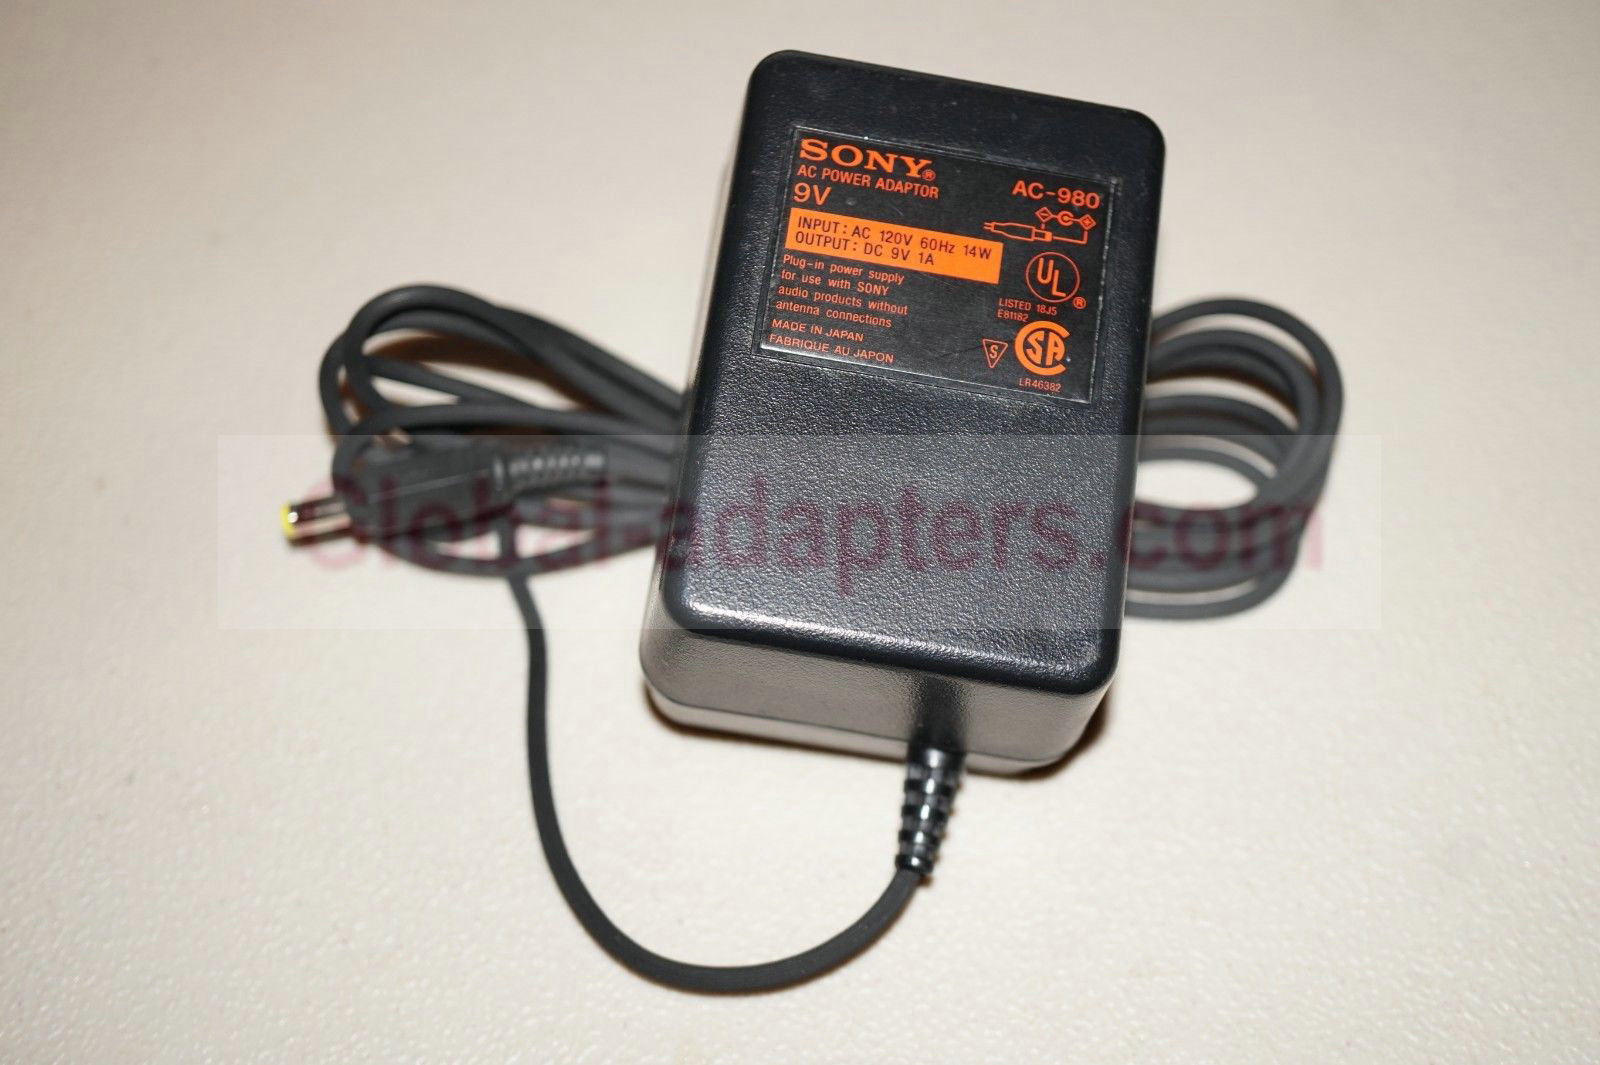 New 9V 1A Sony AC-980 AC Power Adapter